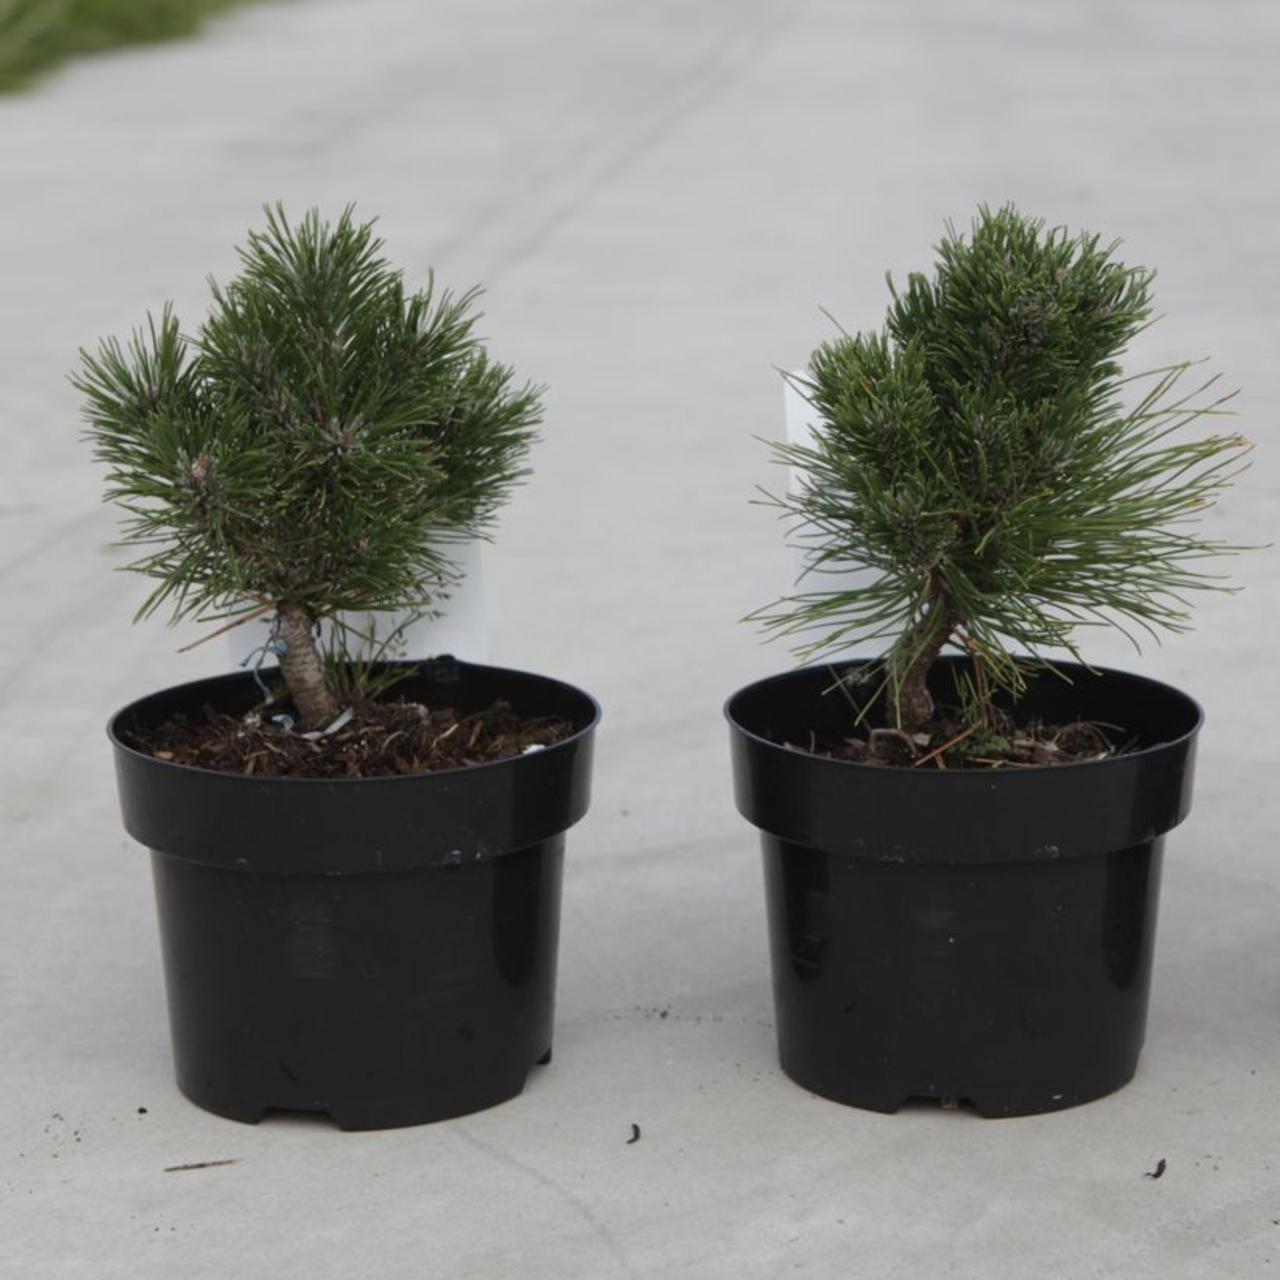 Pinus mugo 'Heideperle' plant